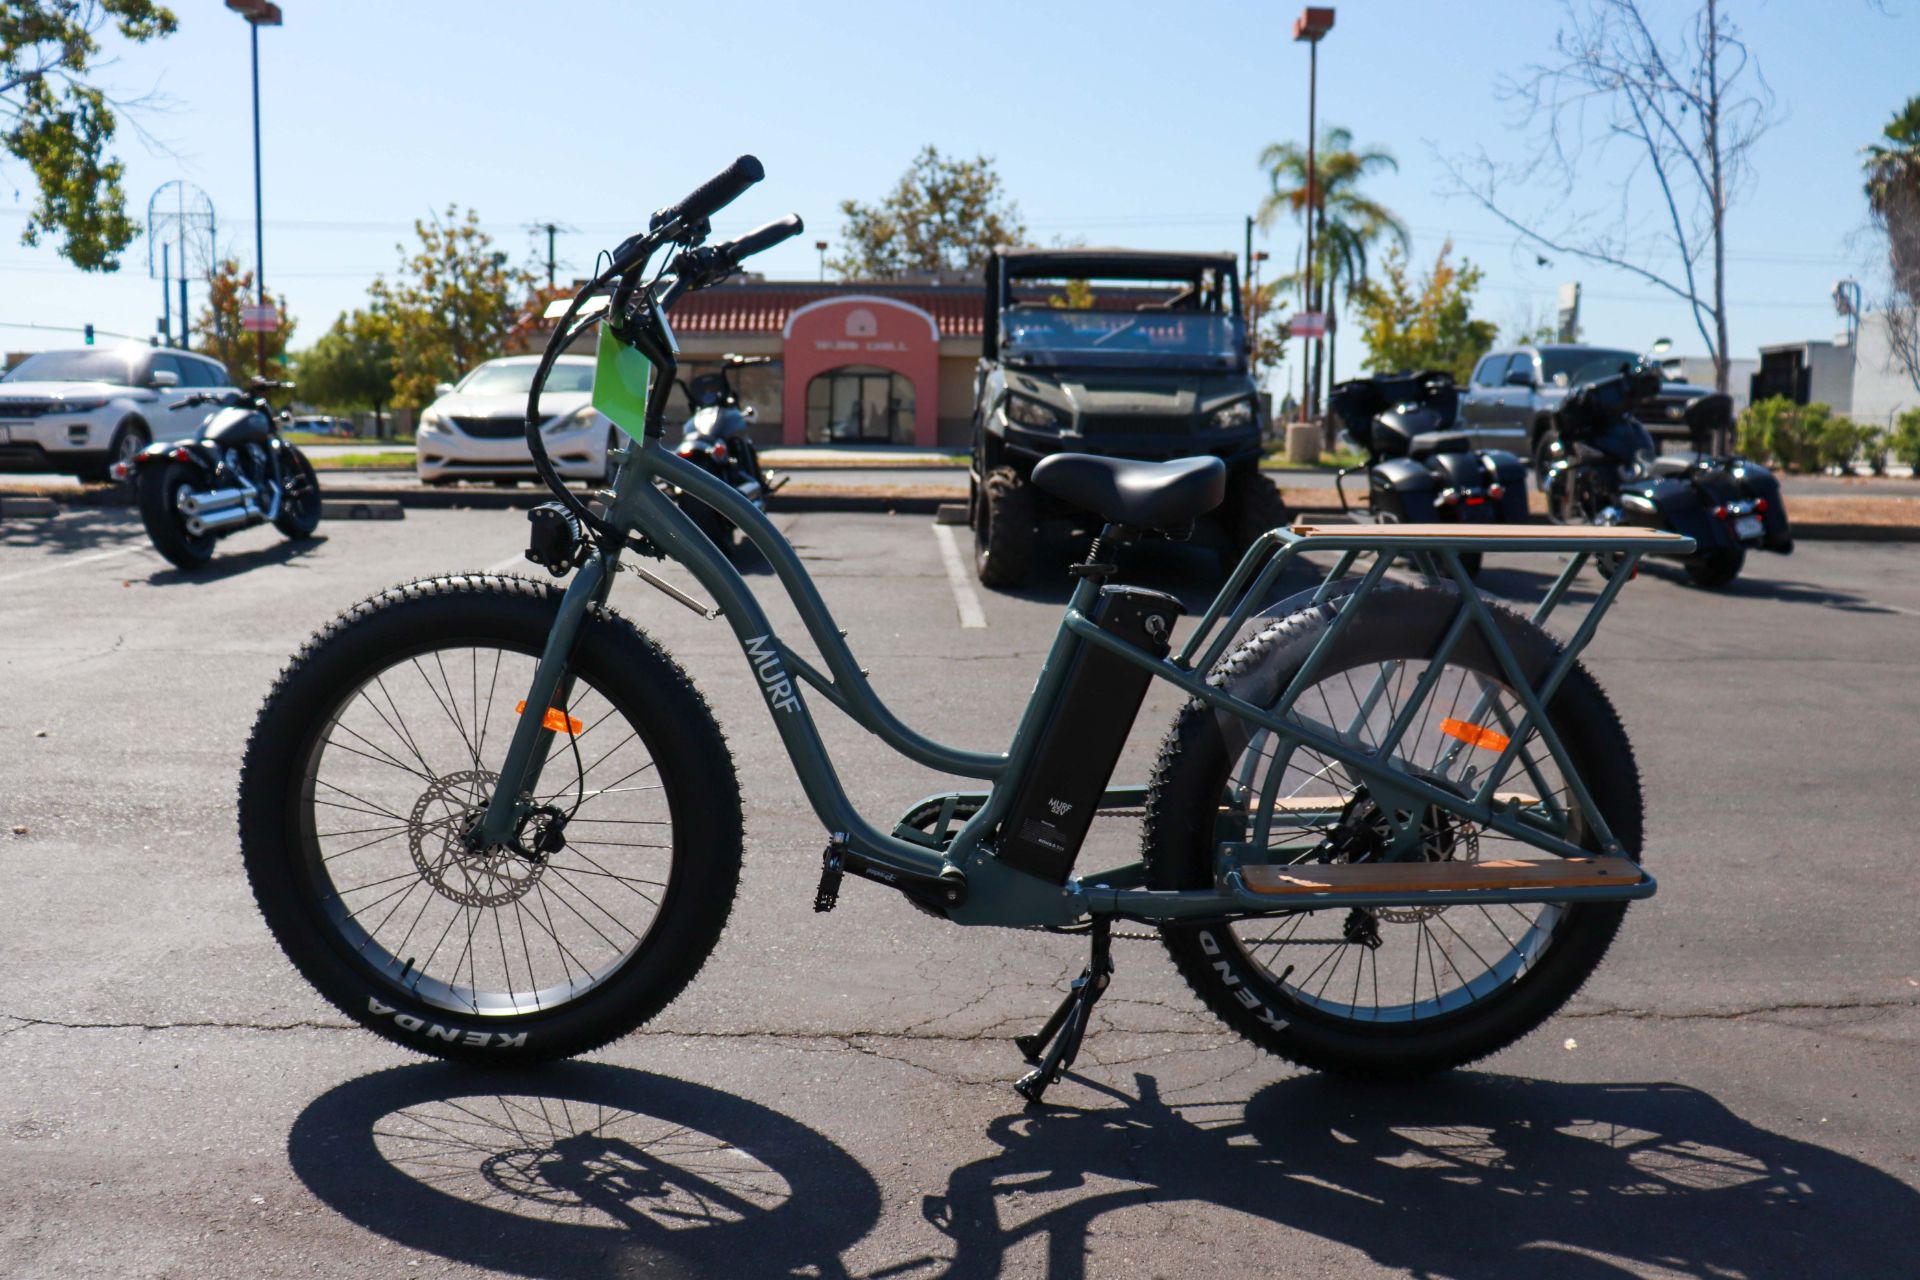 2022 Murf Electric Bikes Alpha Cargo w/Running Boards in San Diego, California - Photo 4